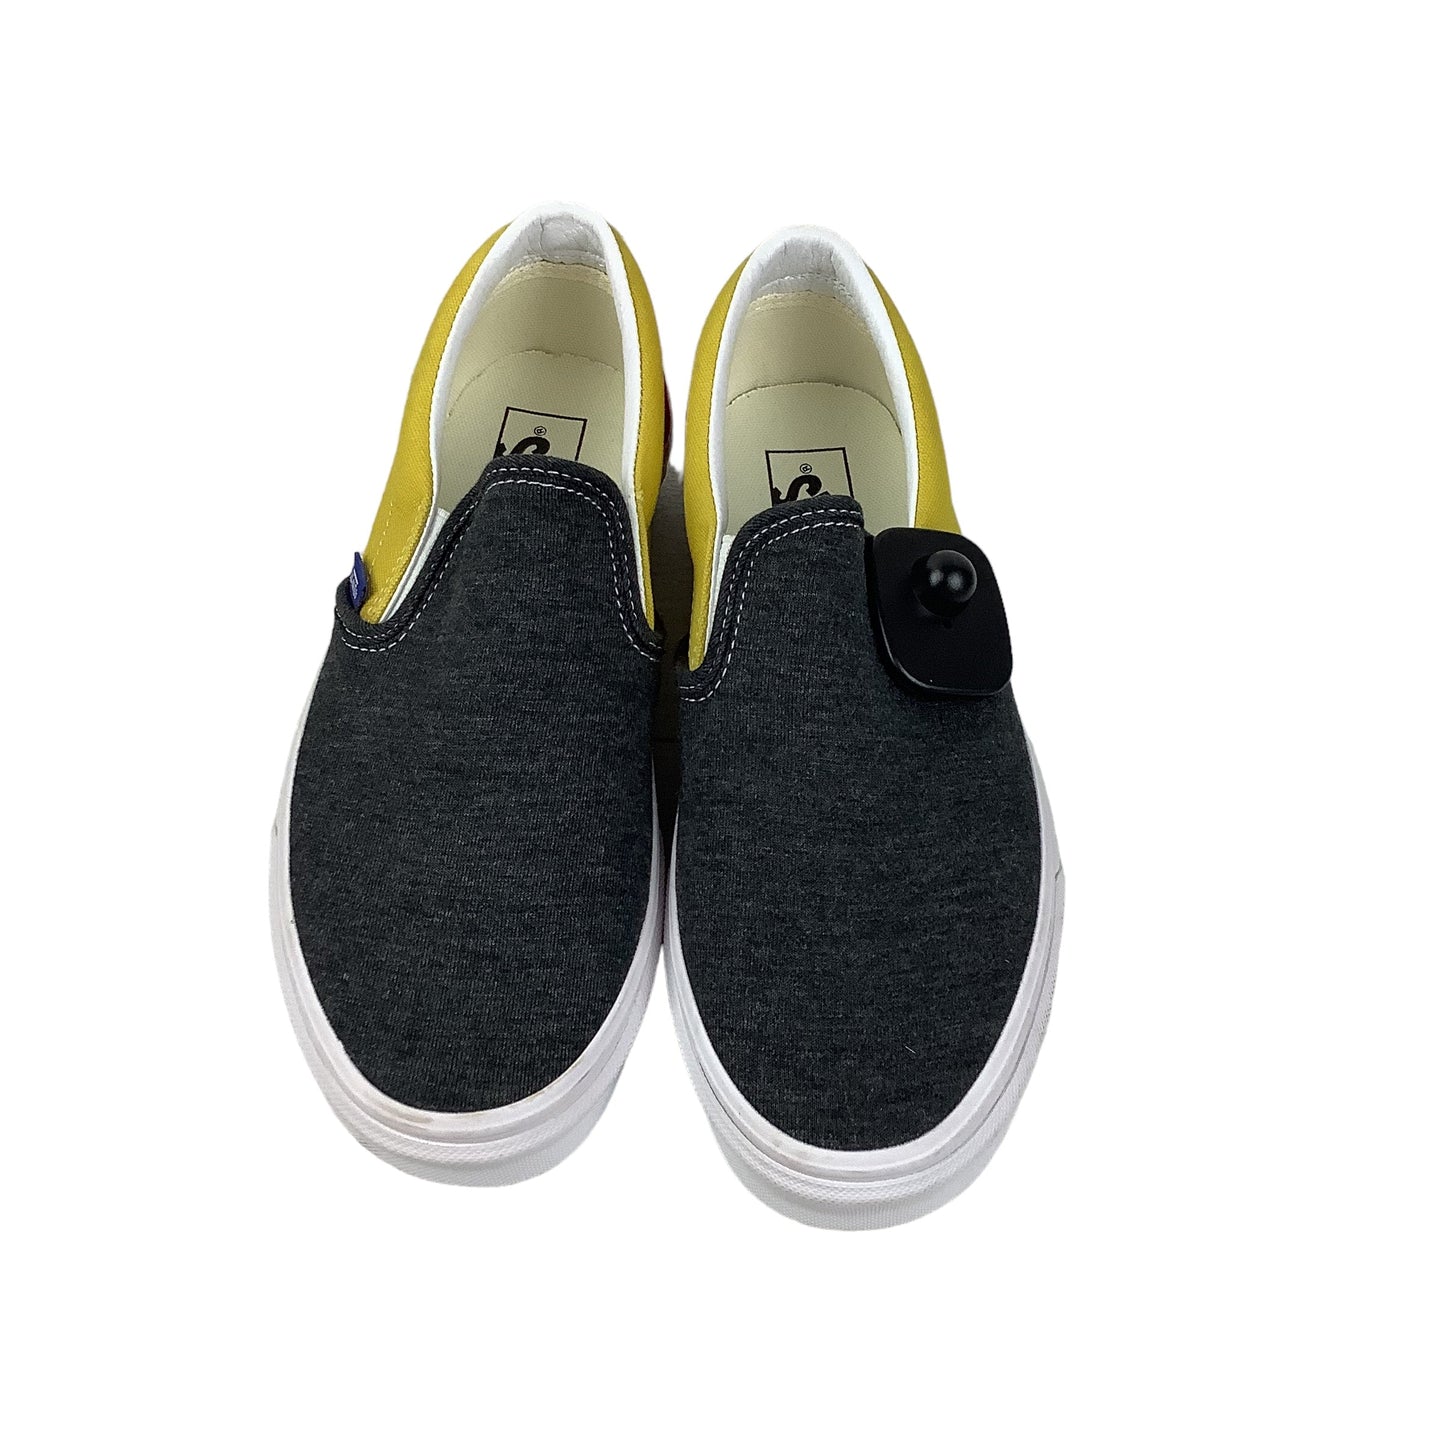 Grey Shoes Flats Vans, Size 9